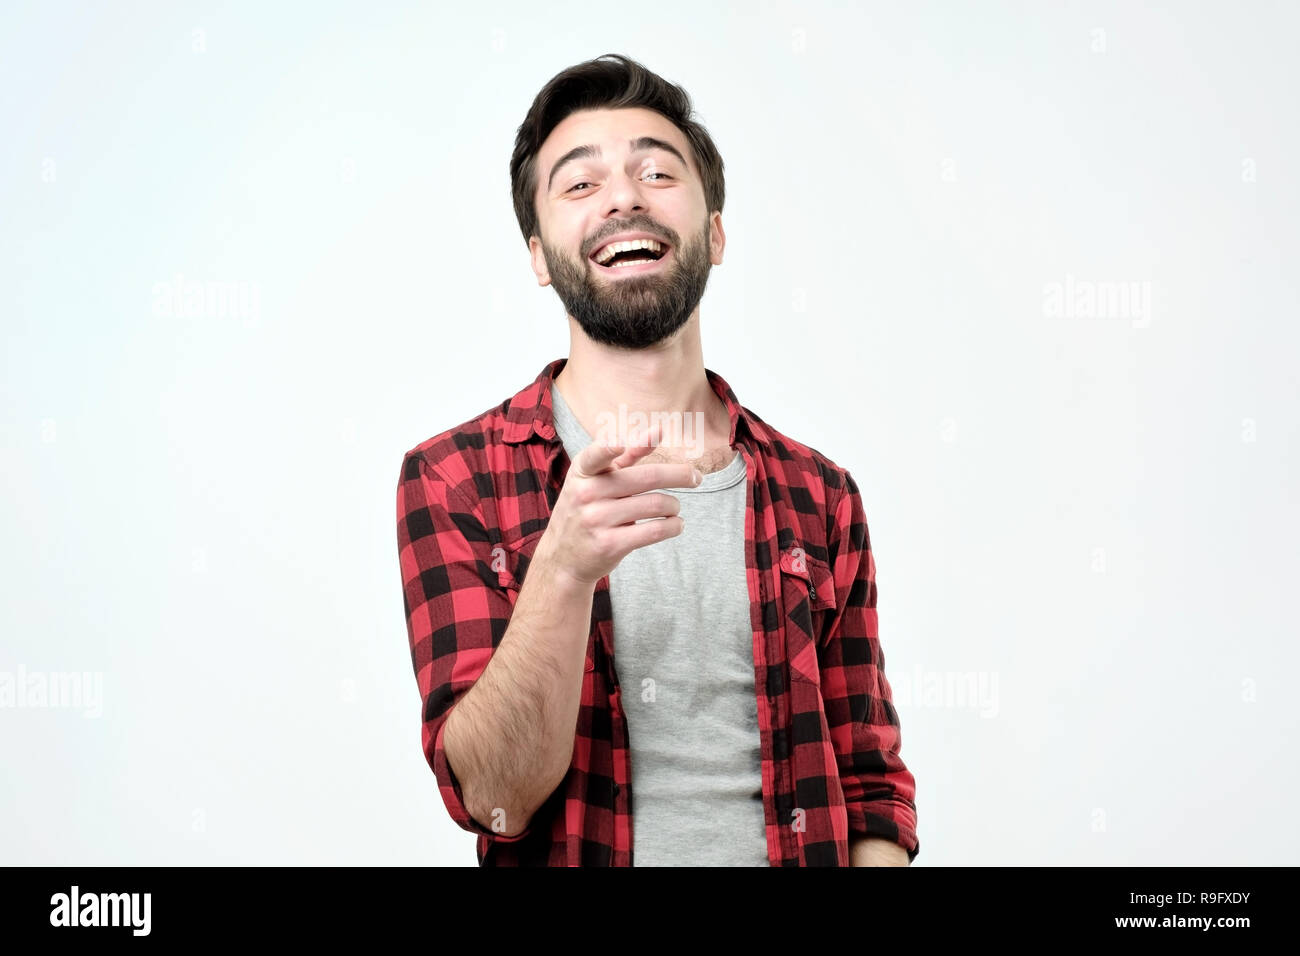 Spanish man mocking you or laughing on his friend joke Stock Photo